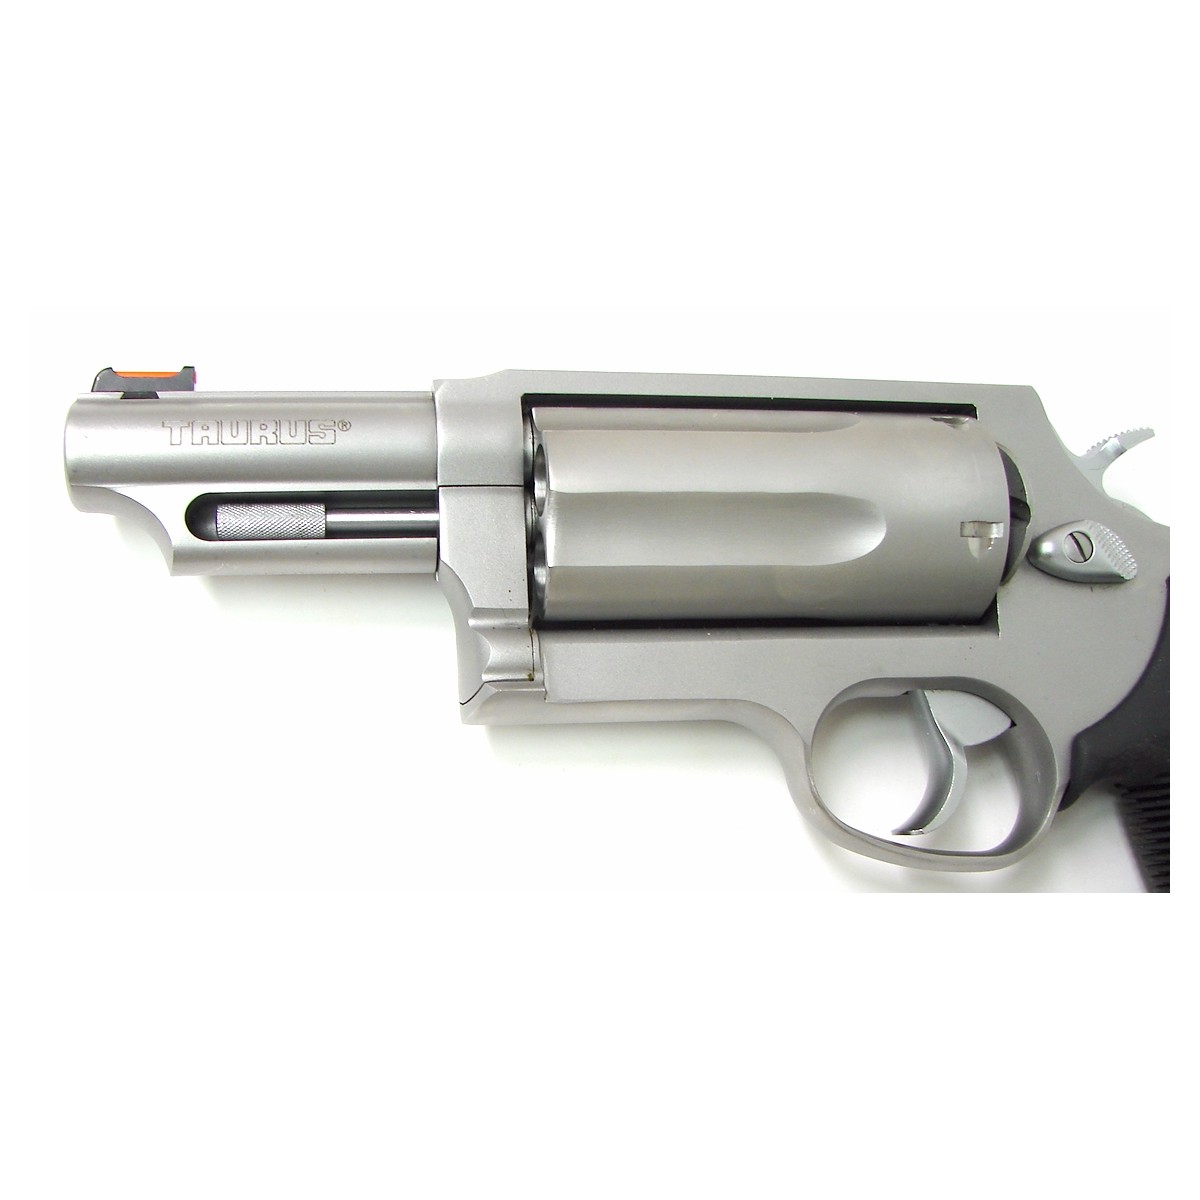 Taurus 413 .45 LC / 410 gauge caliber revolver. Stainless steel